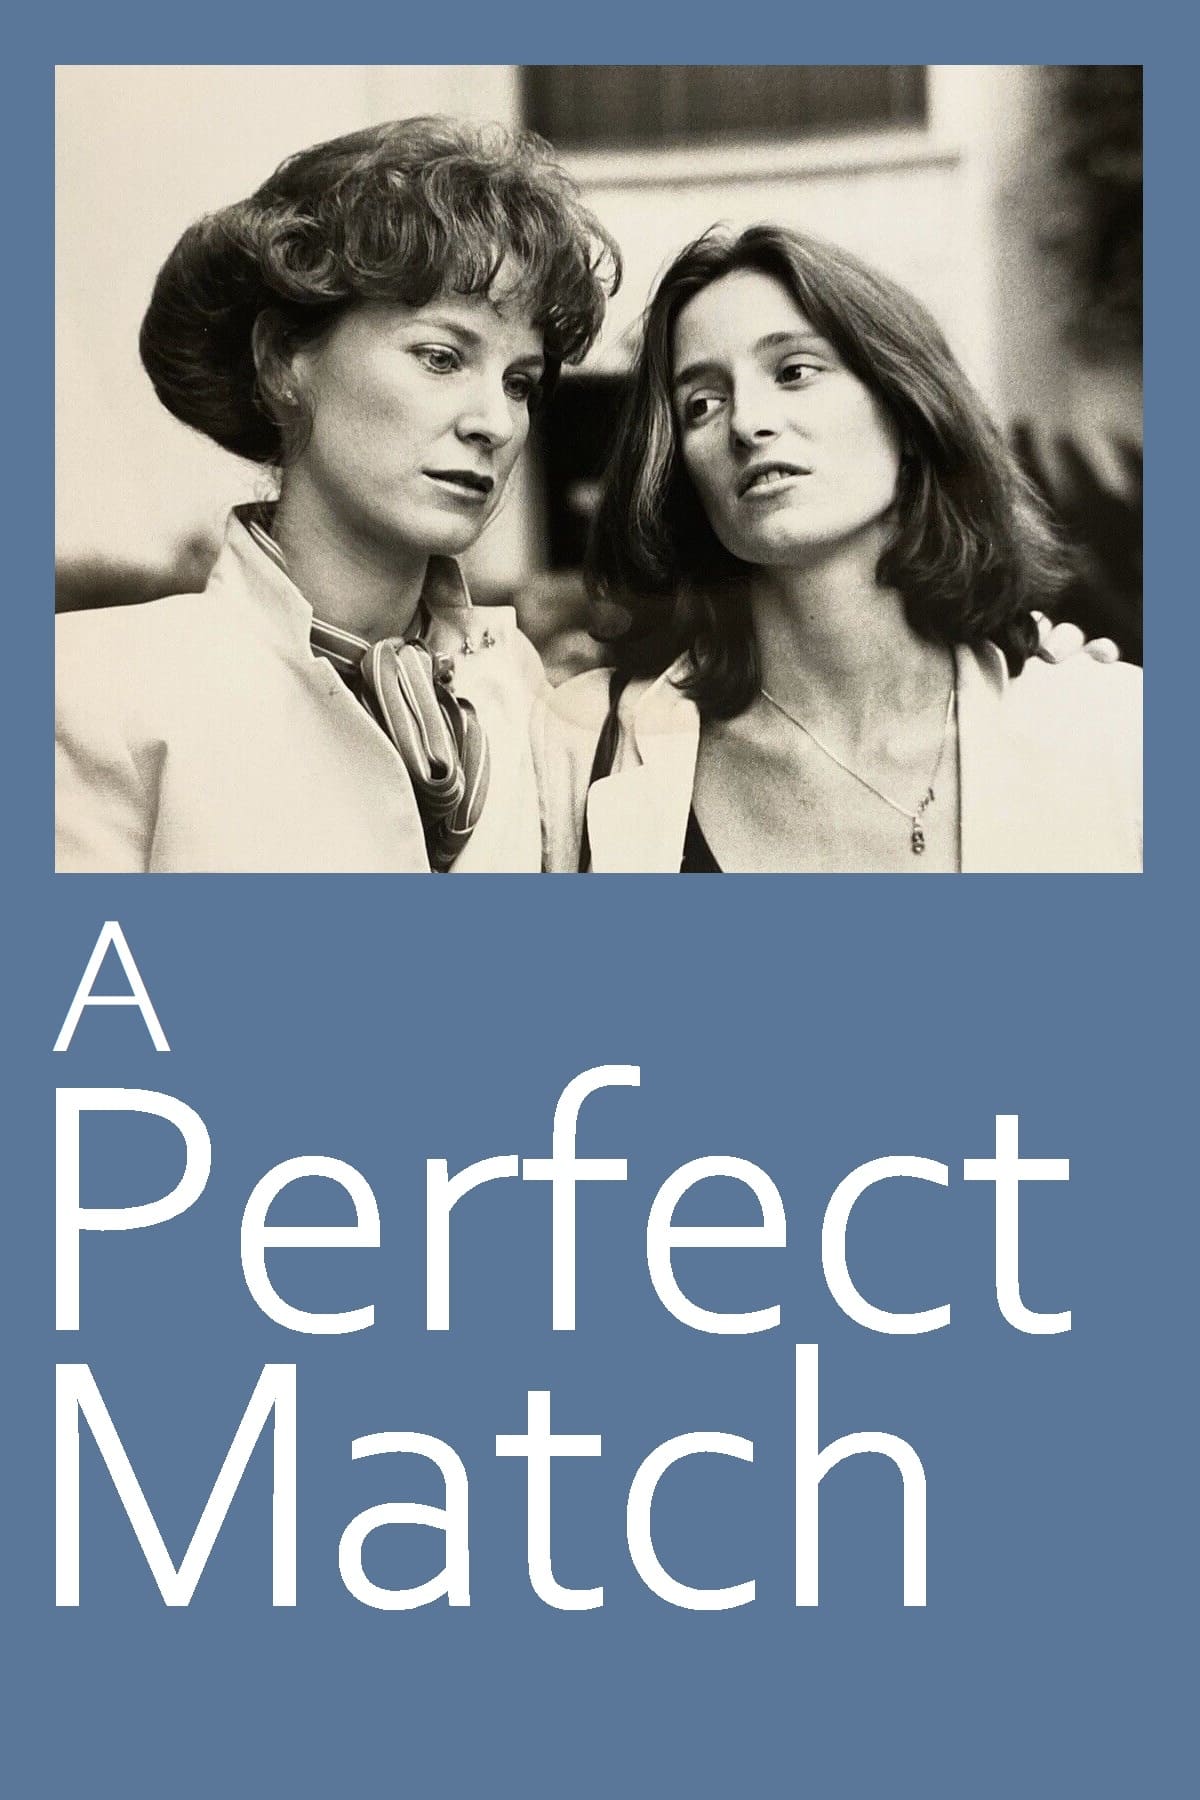 A Perfect Match (1980)